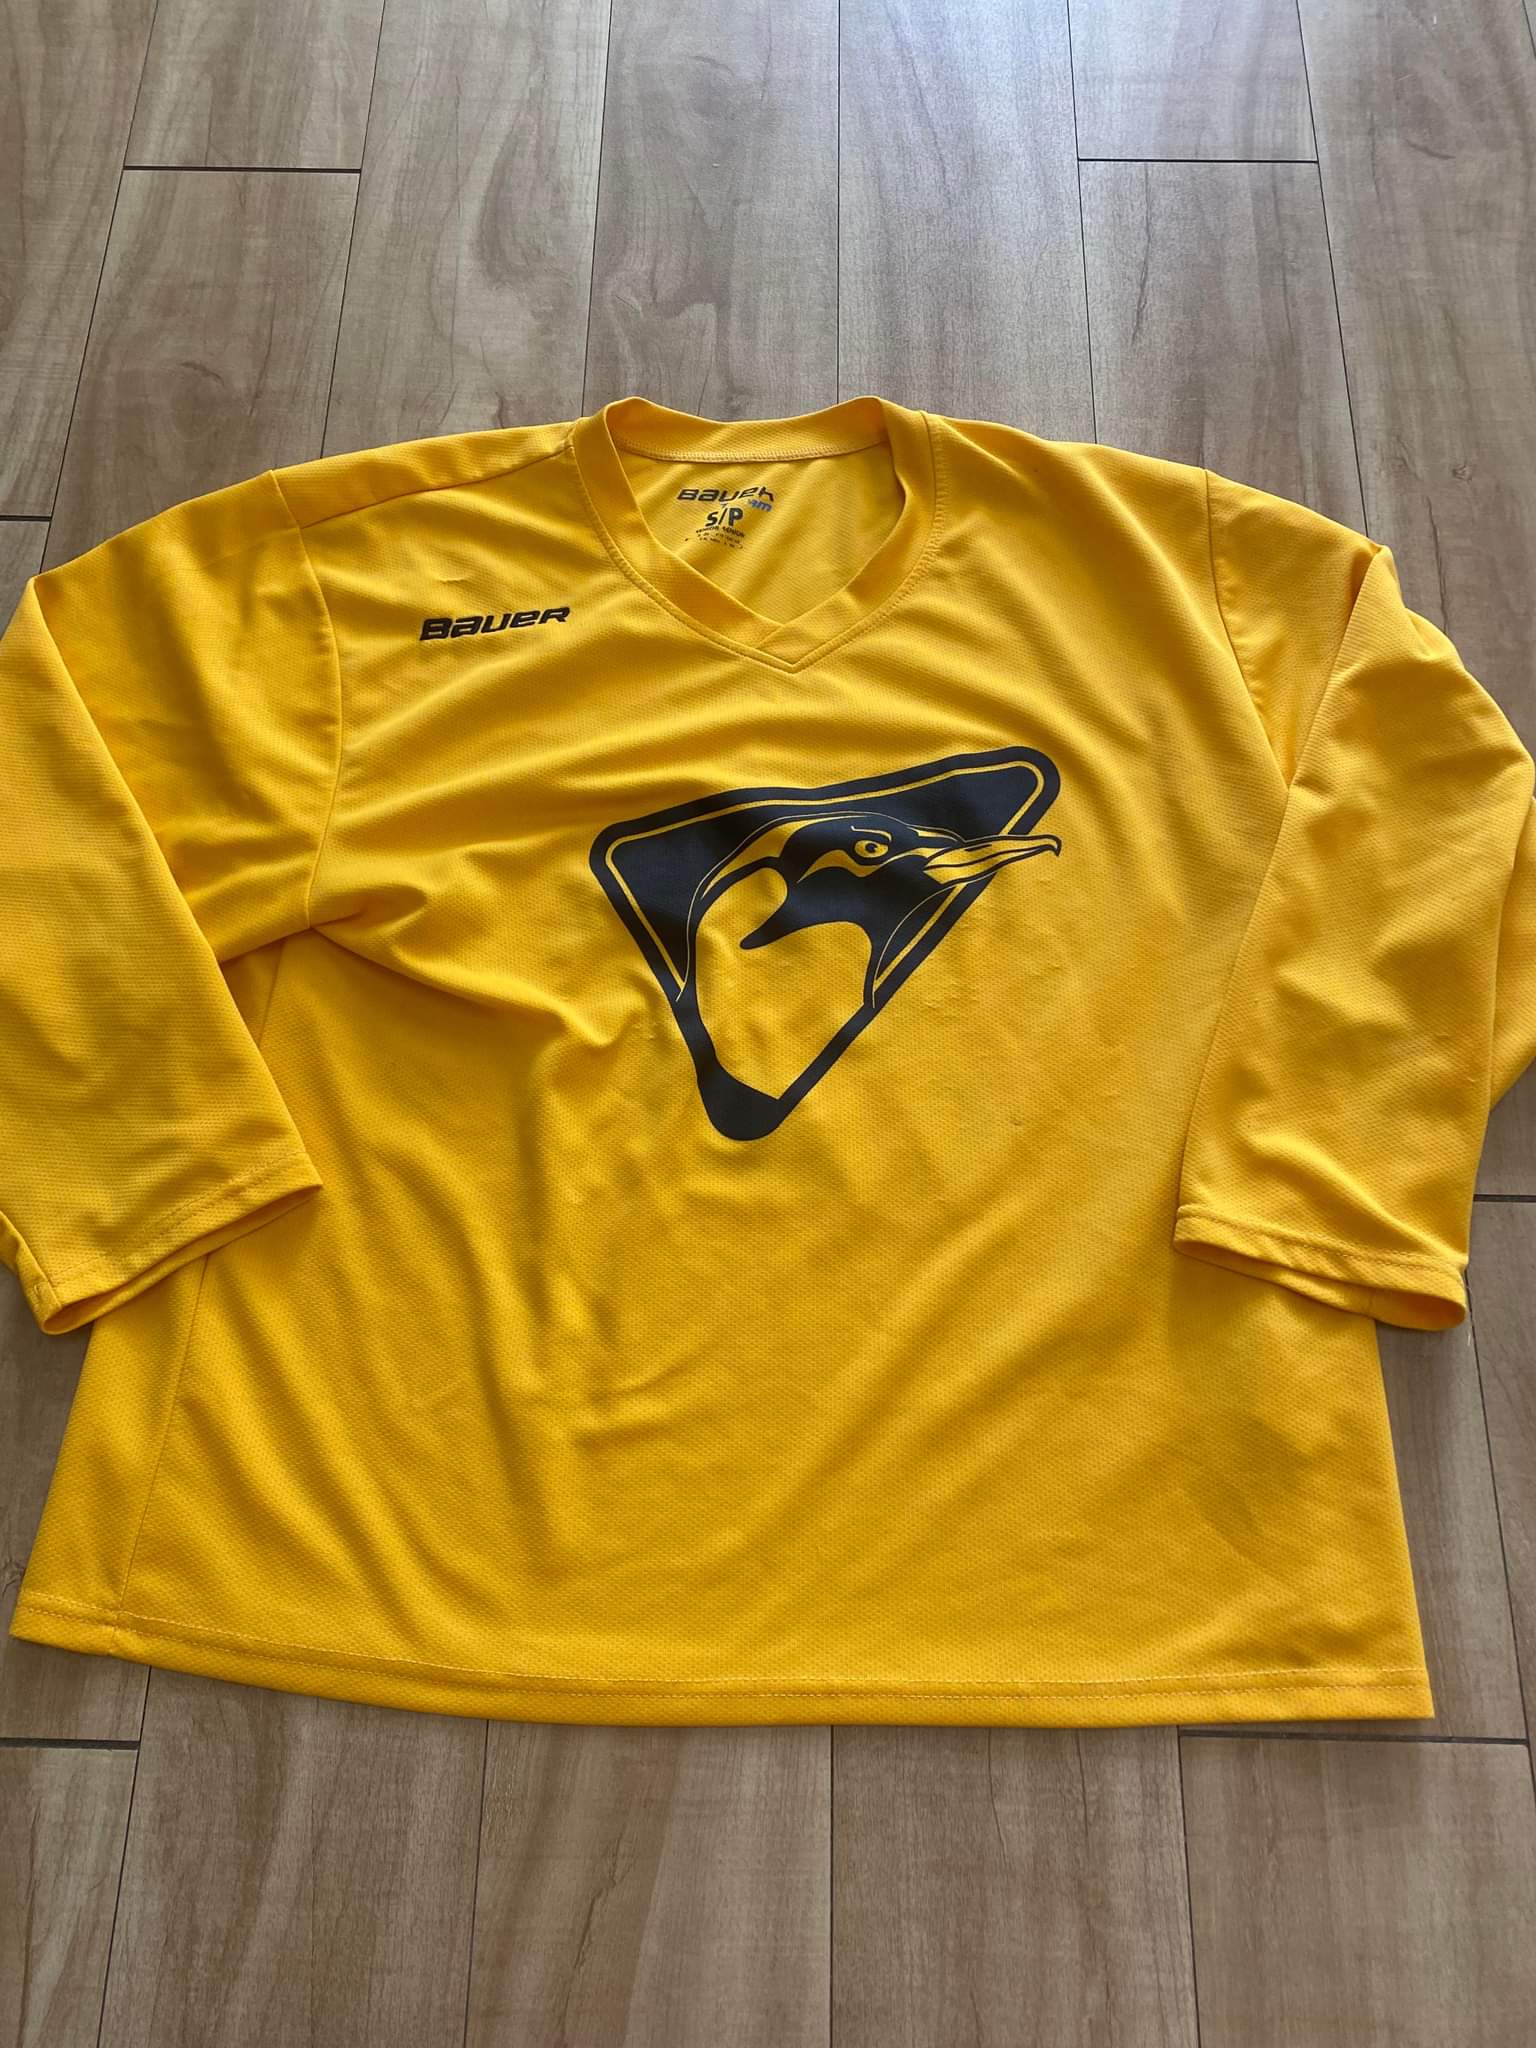 Nike Sarnia Sting Hockey Jersey Yellow Size XL